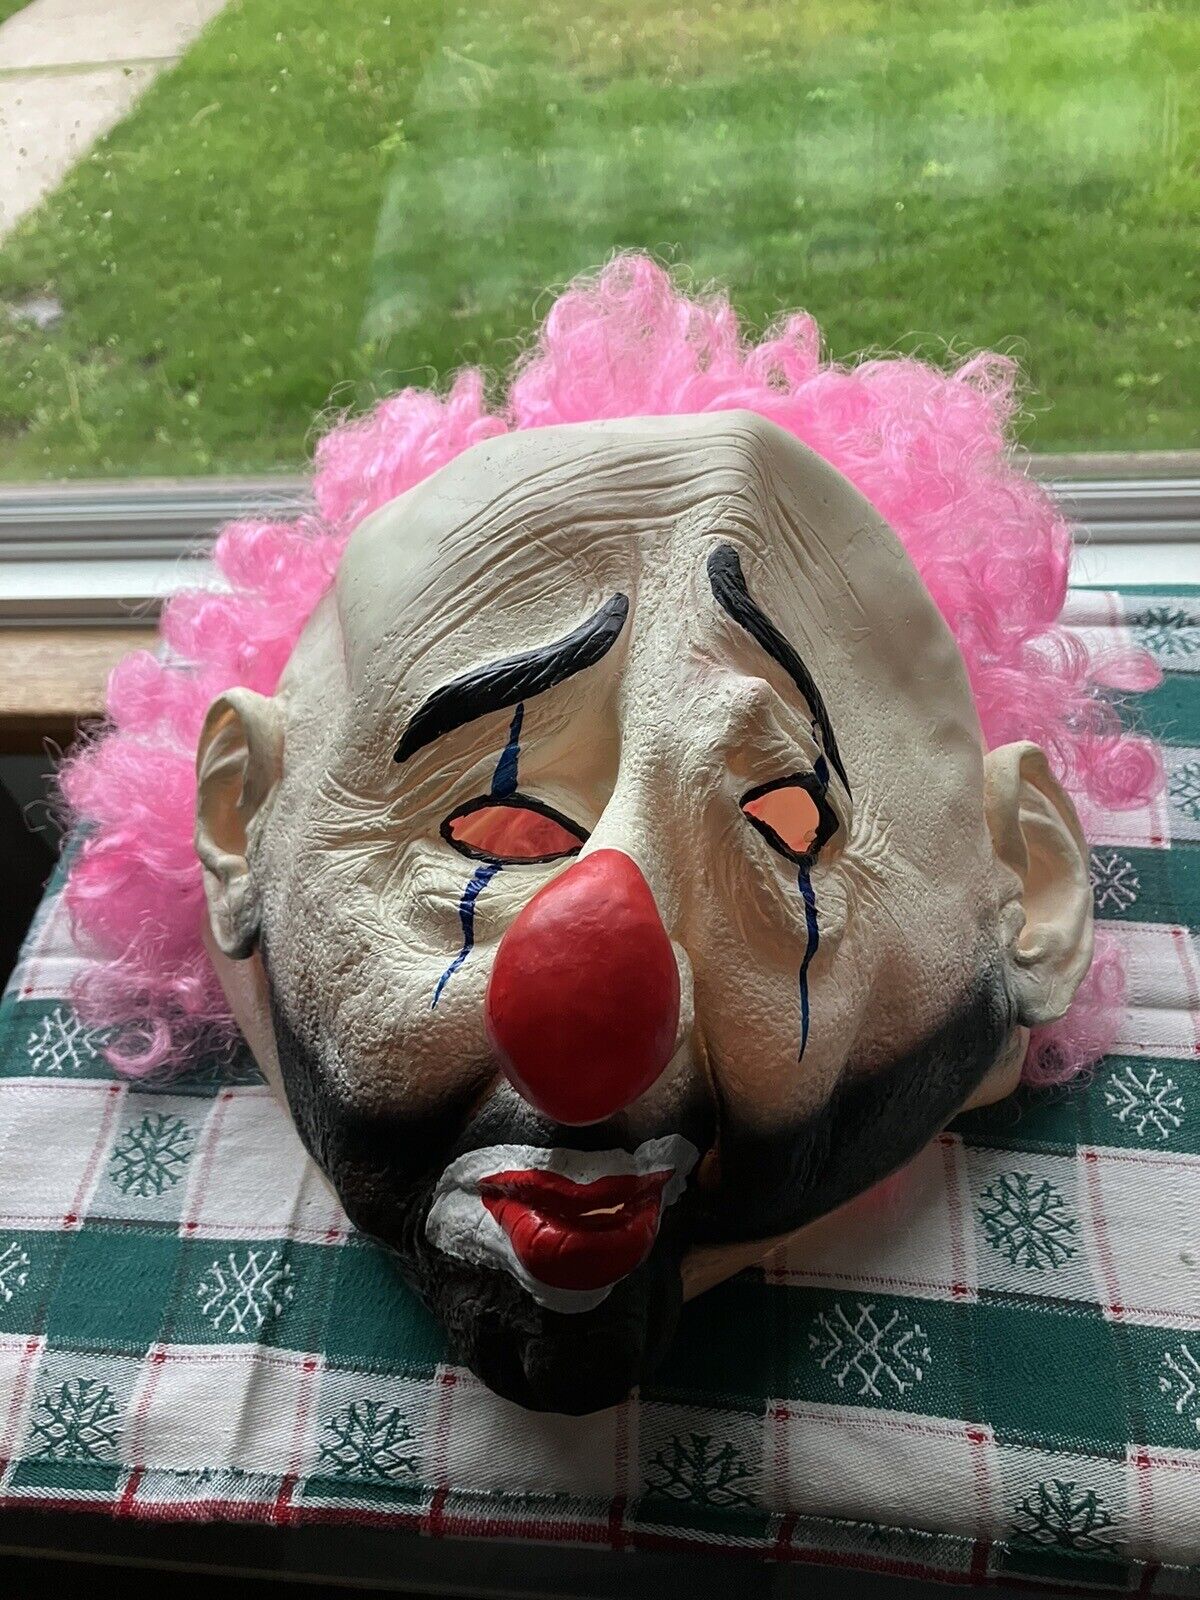 RARE Slipknot Clown ODDBALL Mask 1997 Paper Magic Group Pink Vintage Halloween